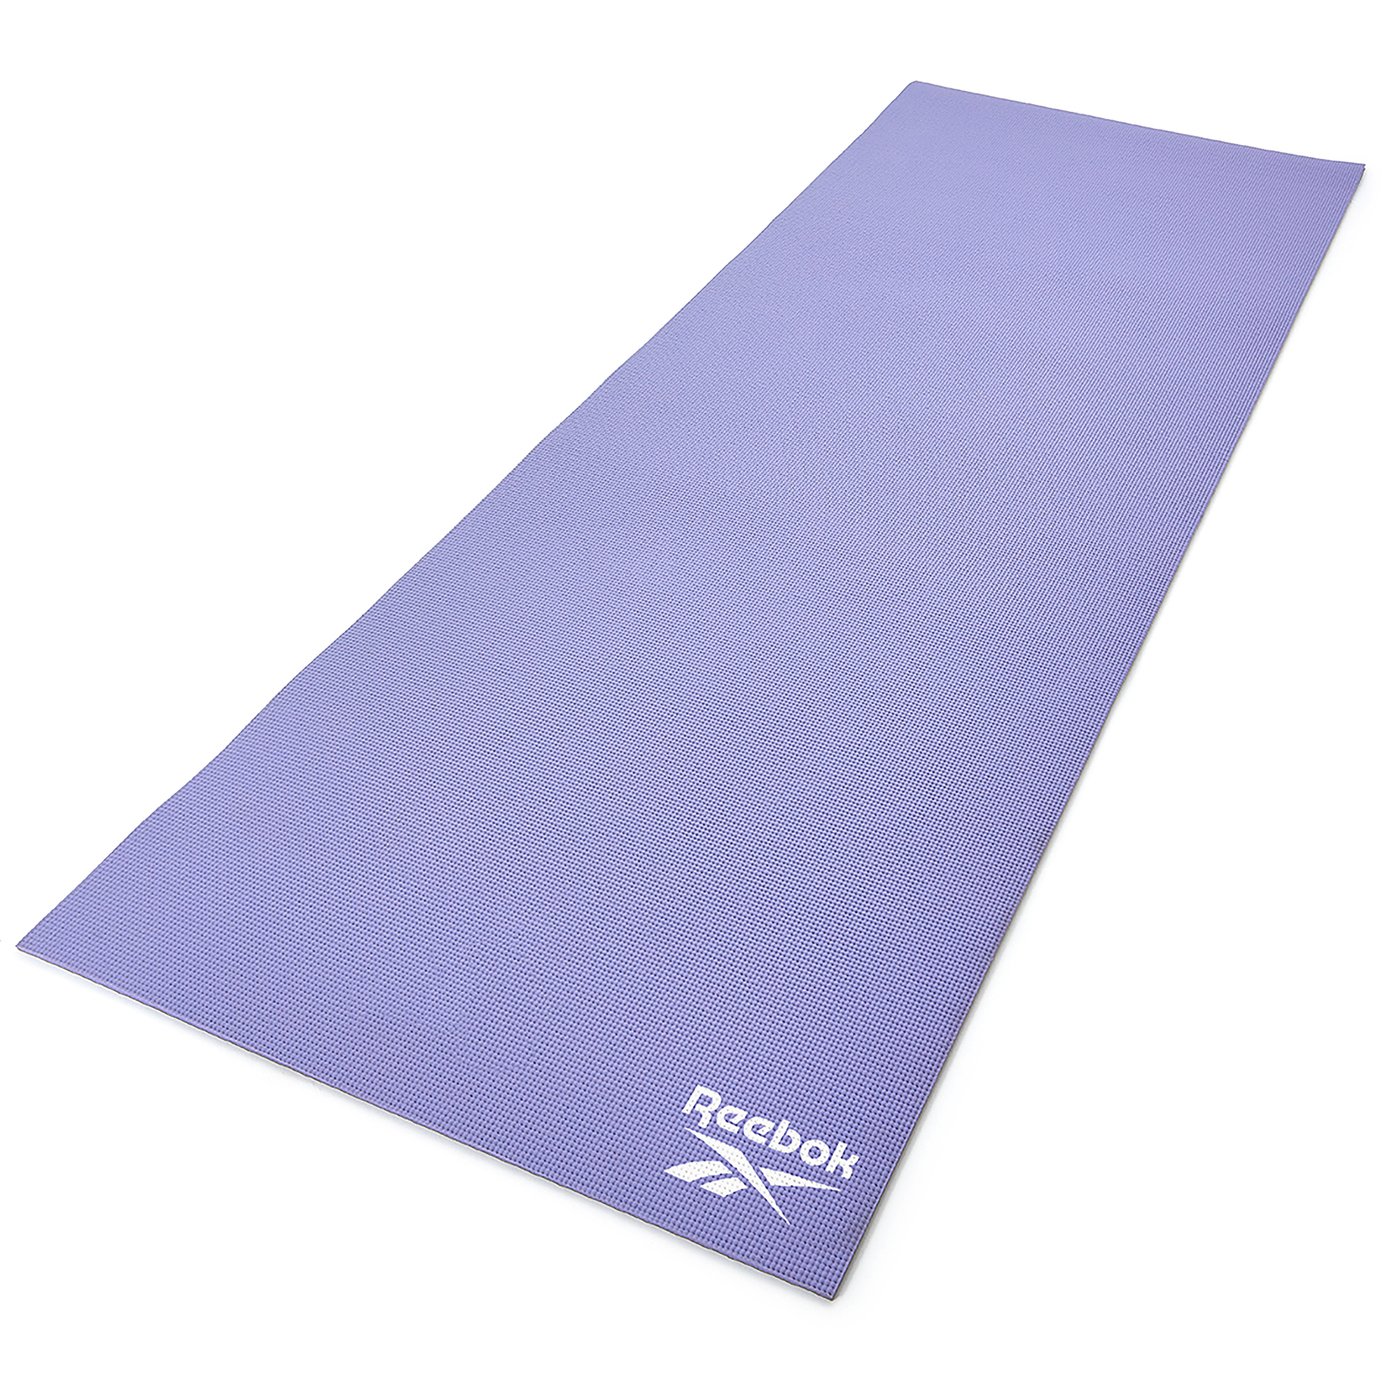 6mm thick yoga mat